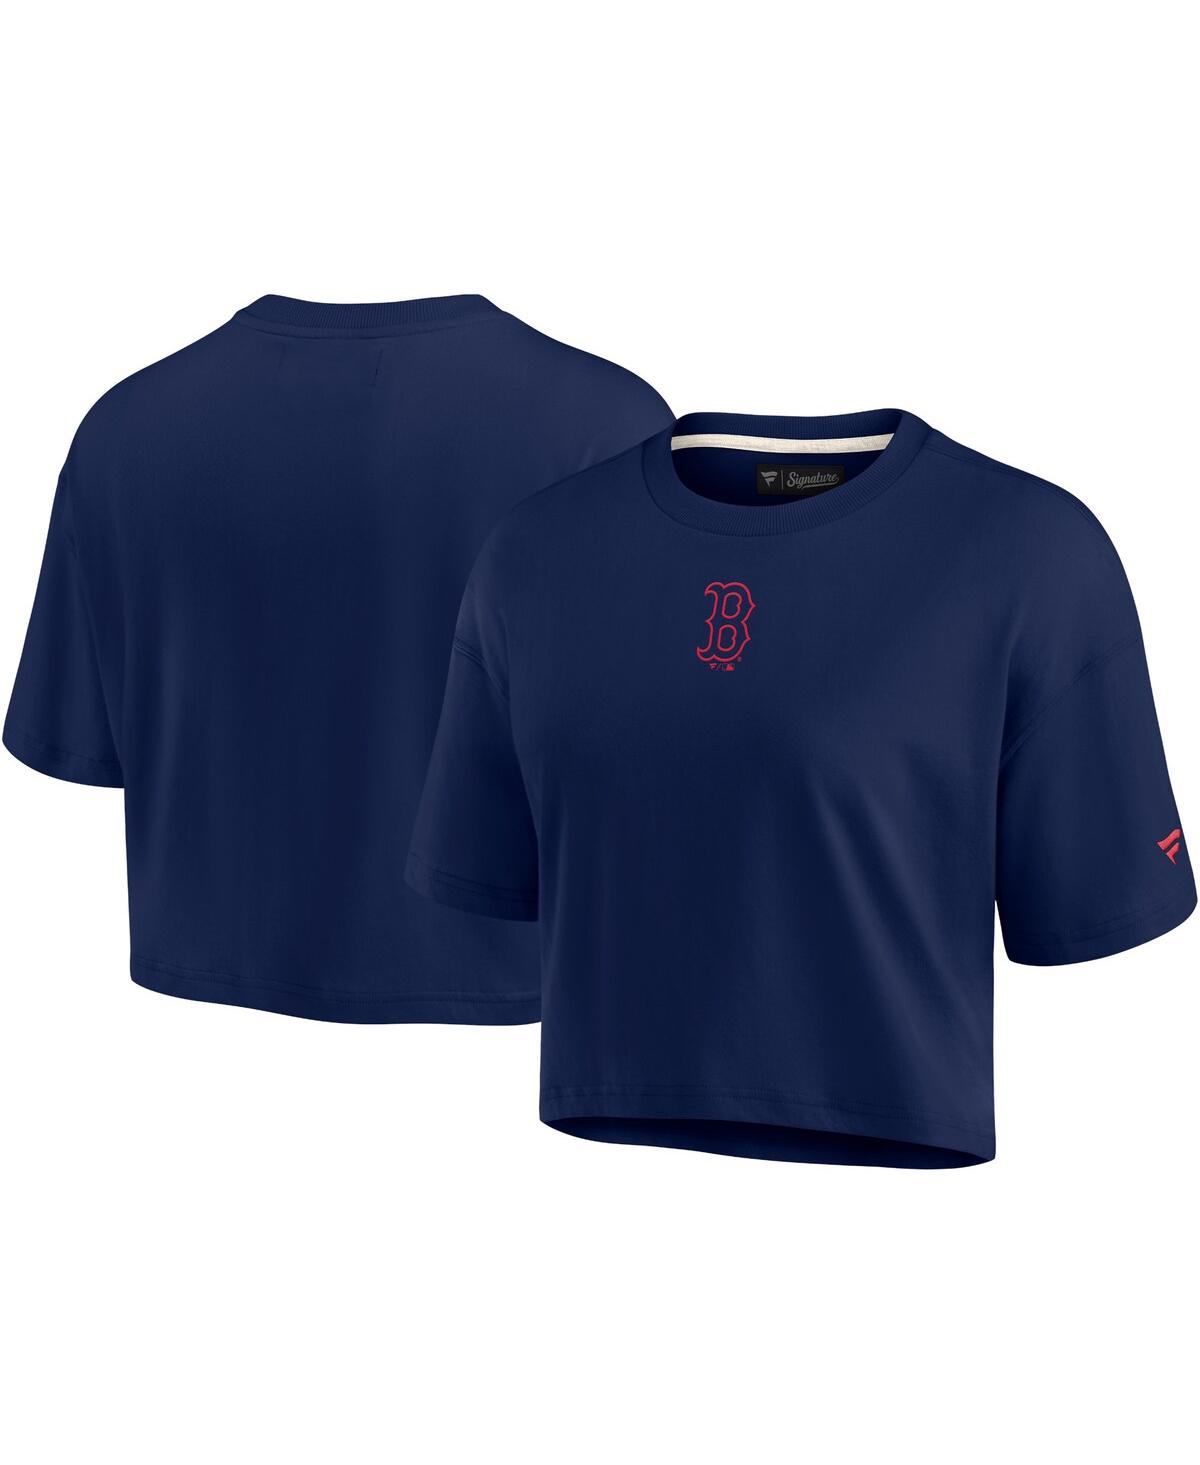 Fanatics Signature Women's  Navy Boston Red Sox Super Soft Short Sleeve Cropped T-shirt